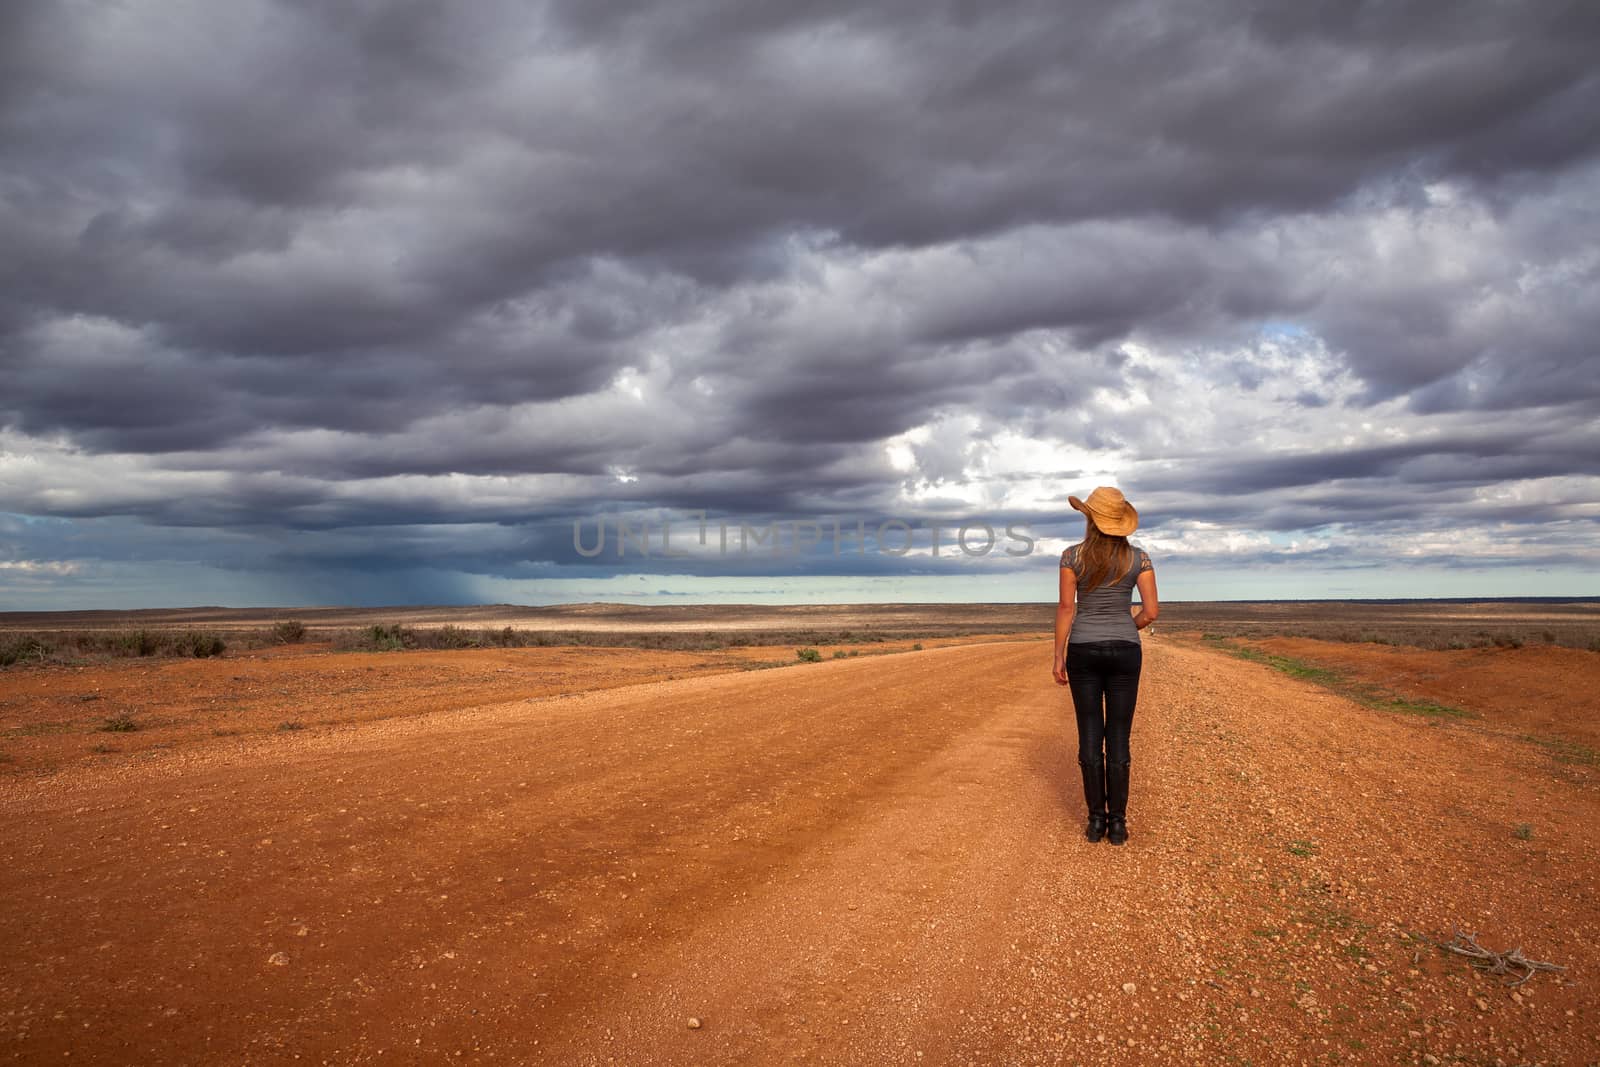 Farm girl watches the storm over an arid desert landscape of outback Australia